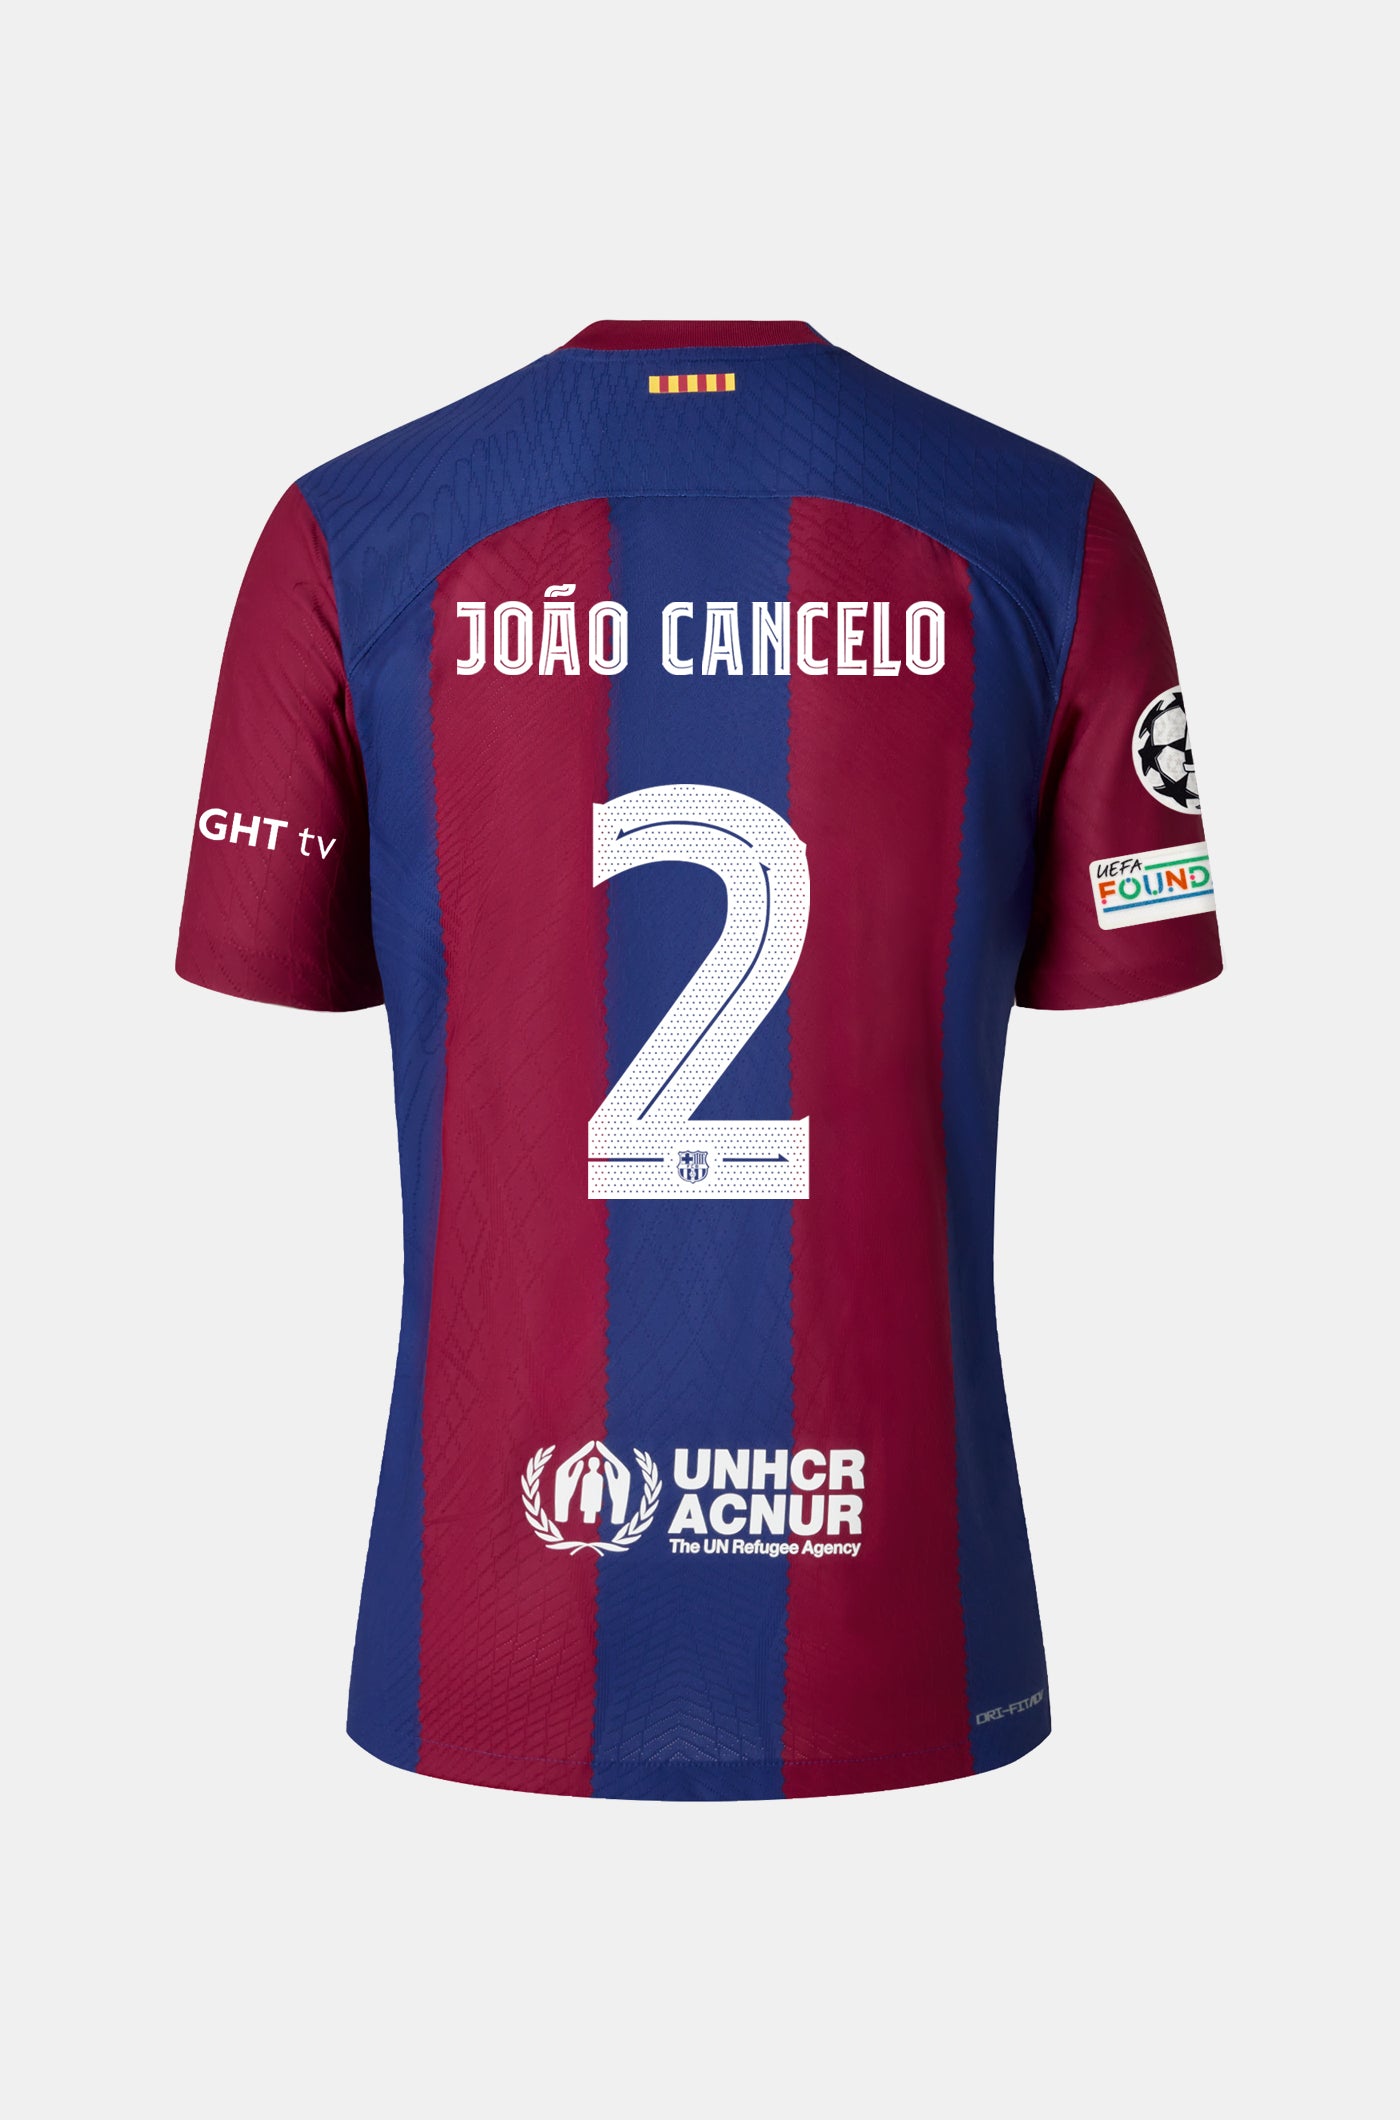 UCL FC Barcelona home shirt 23/24 - JOÃO CANCELO